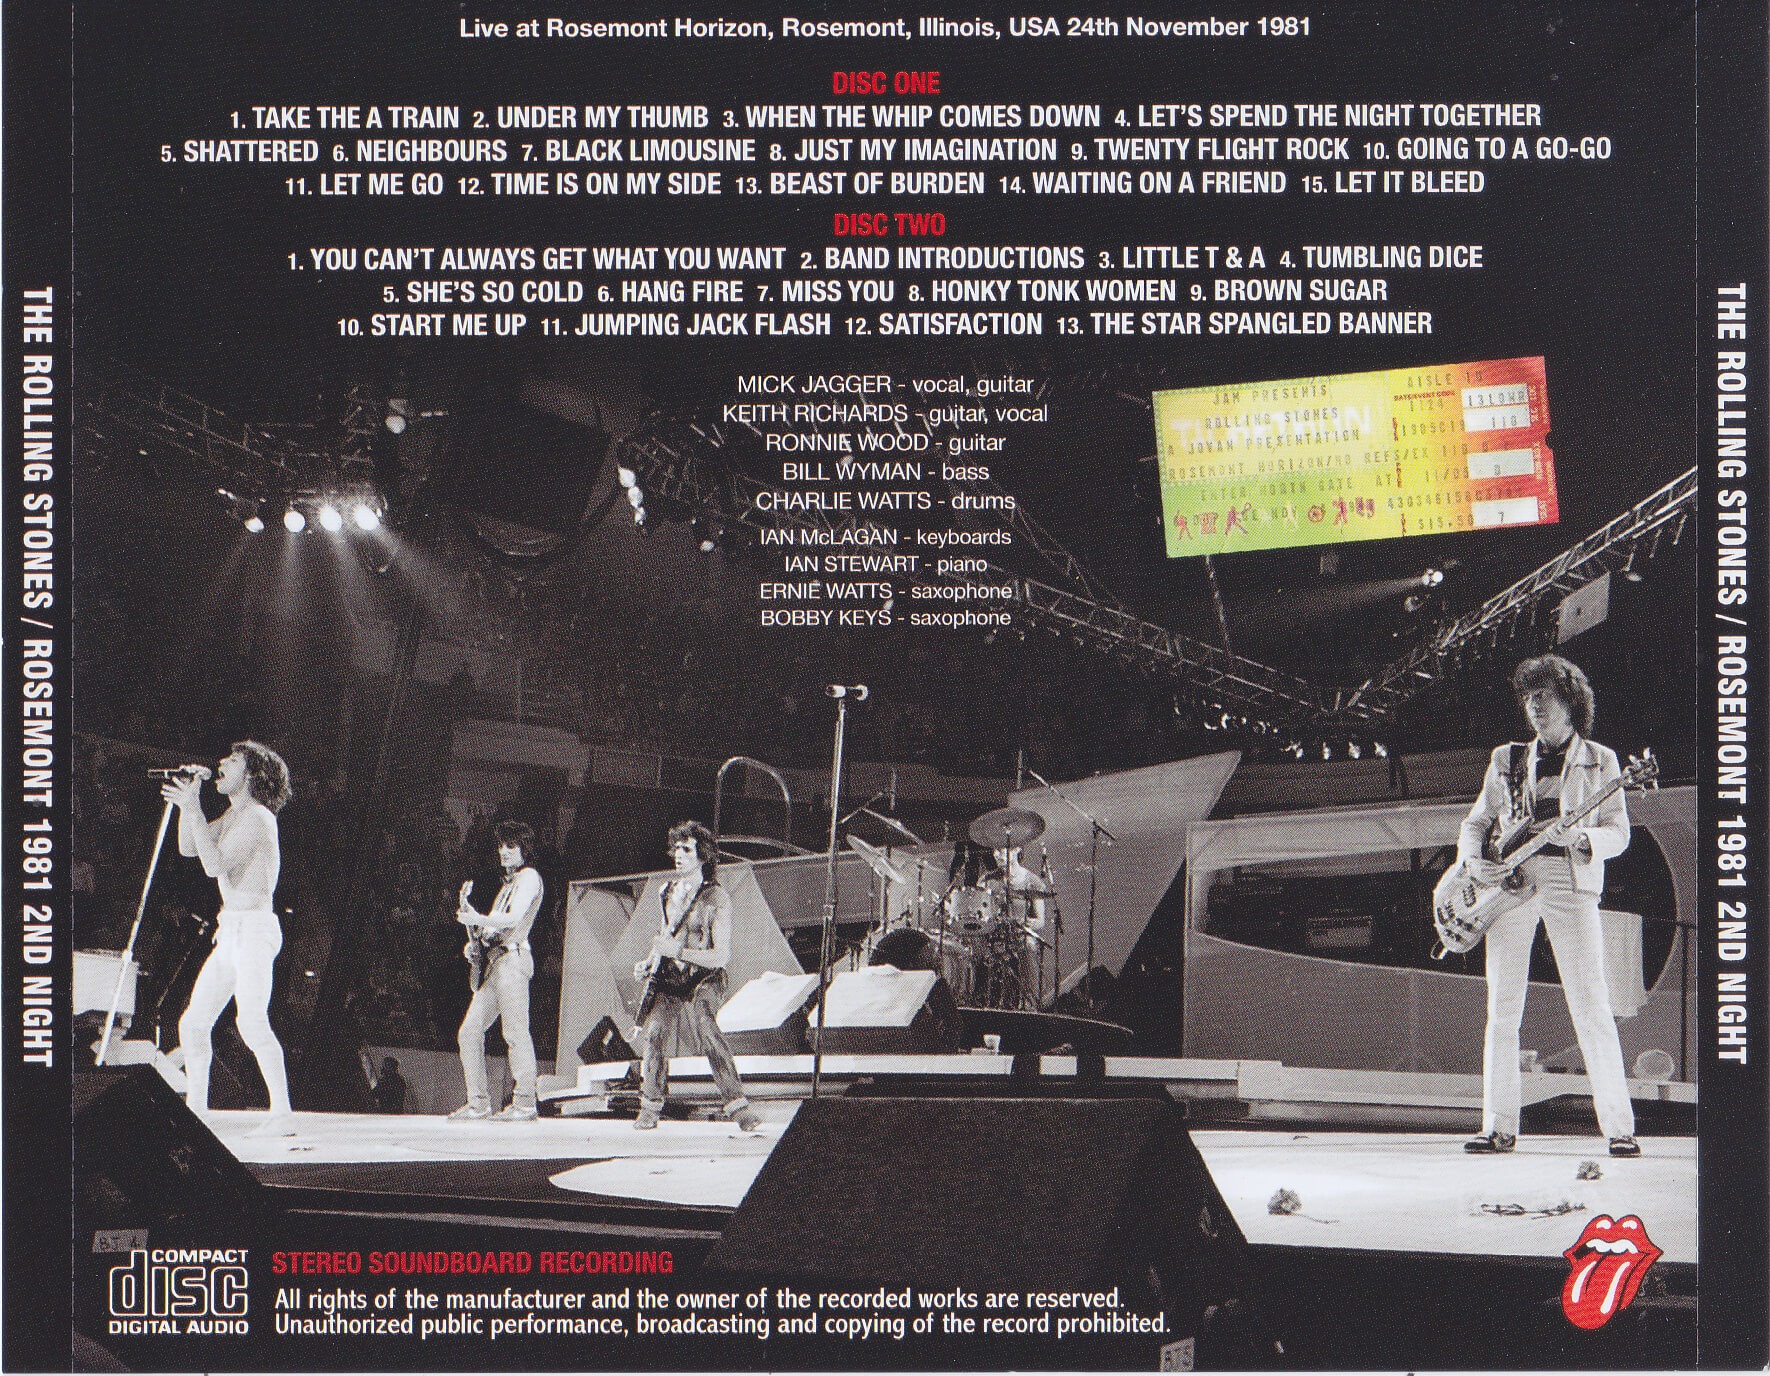 Rolling Stones / Rosemont 1981 2nd Night / 2CD – GiGinJapan